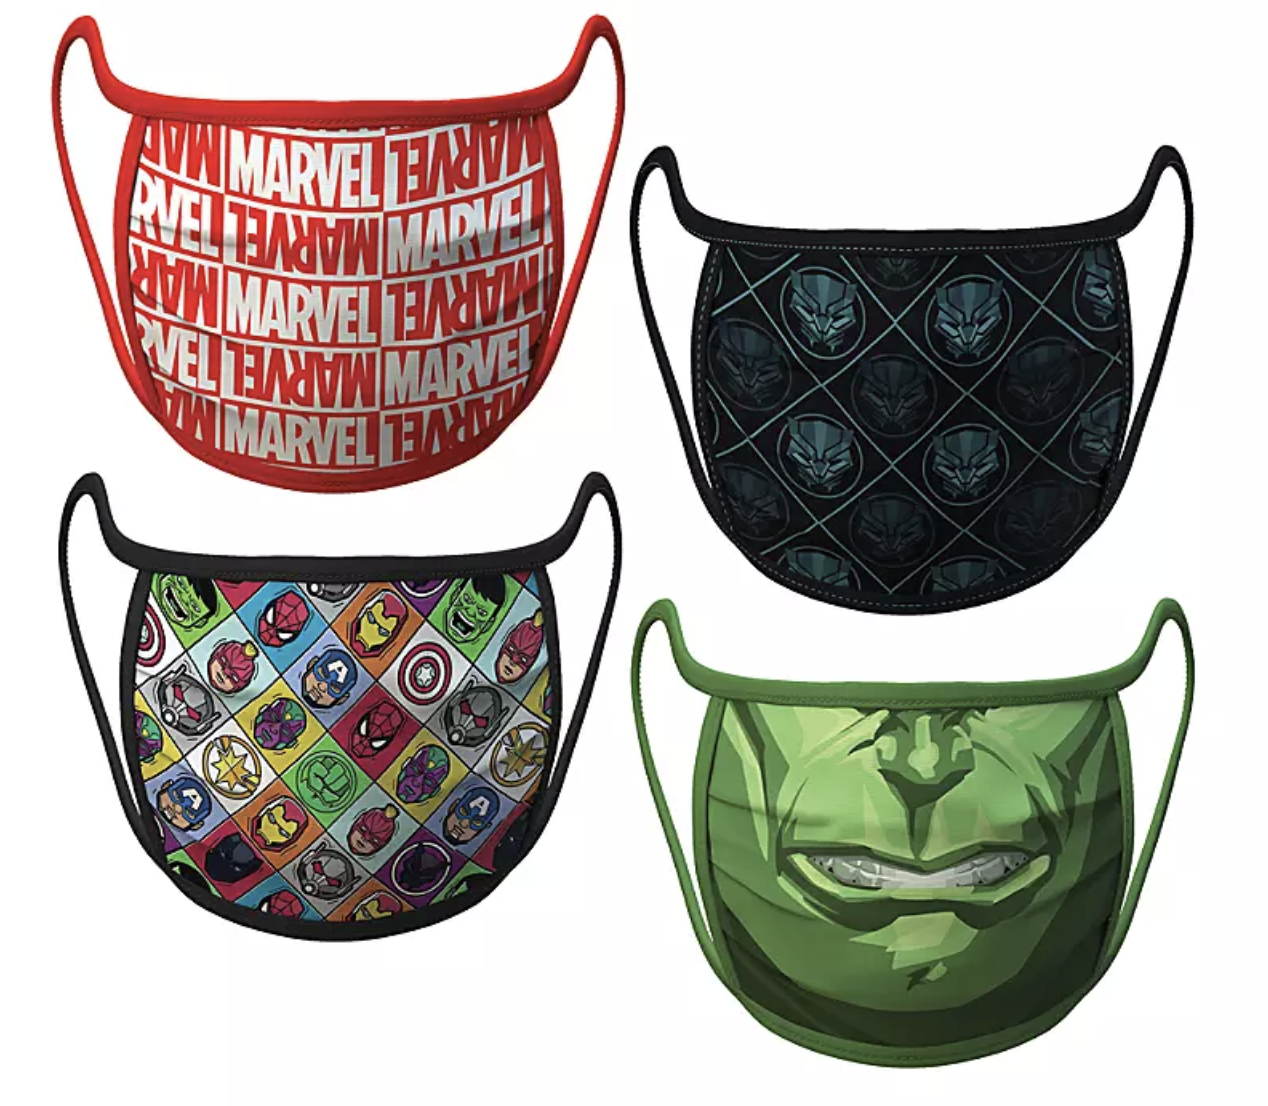 Four face masks in various Marvel prints